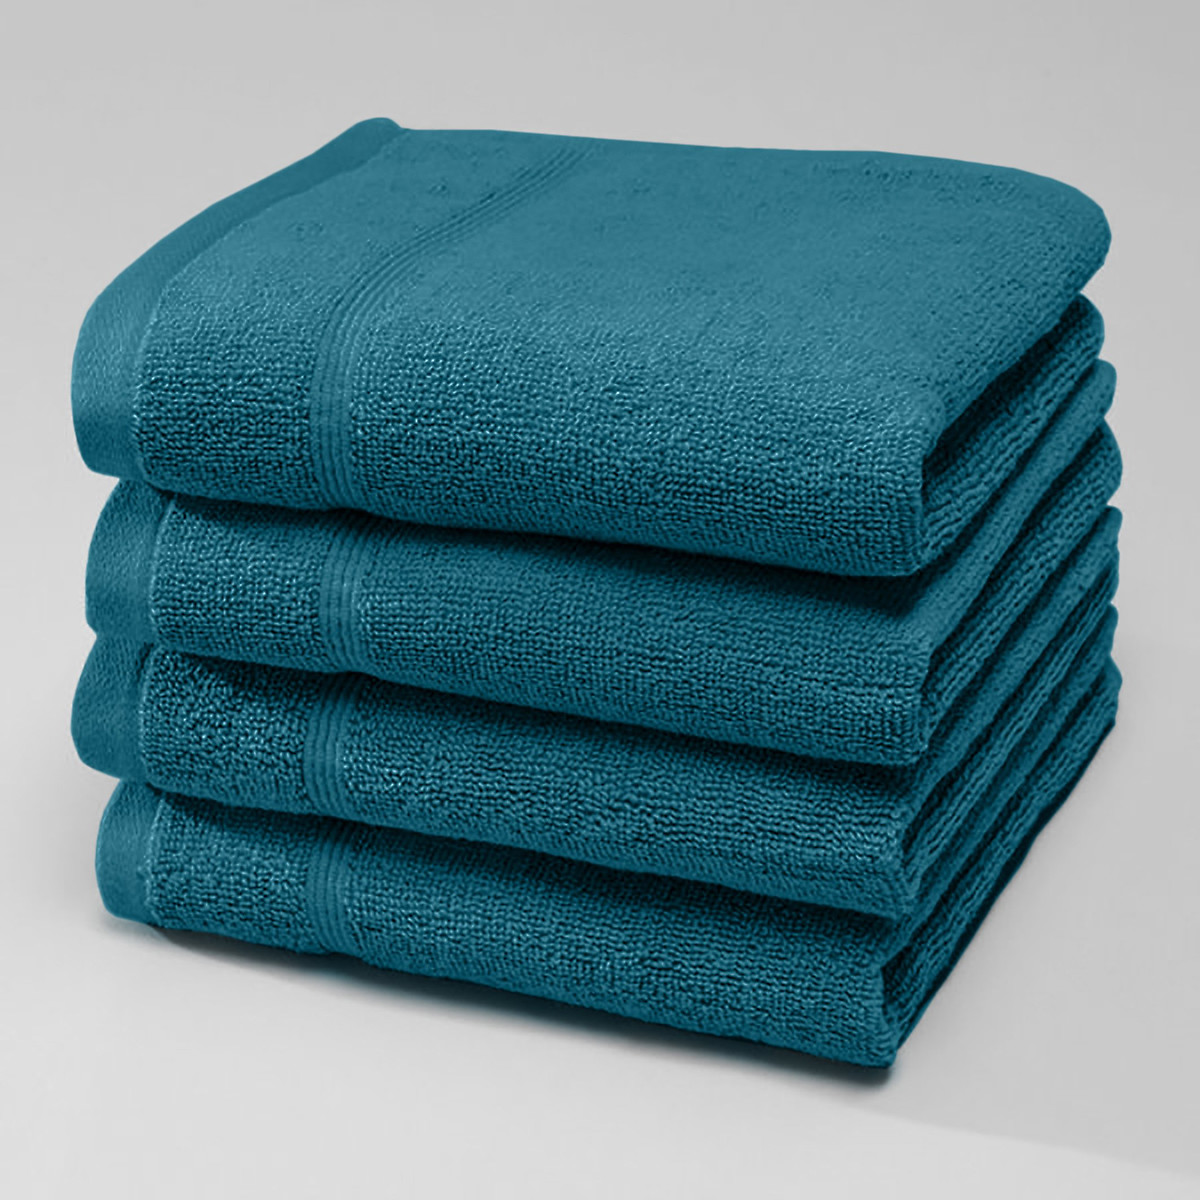 4er Pack Guest Towels Hand Towels Bath Towels Bath Towels Terry 100% Cotton 